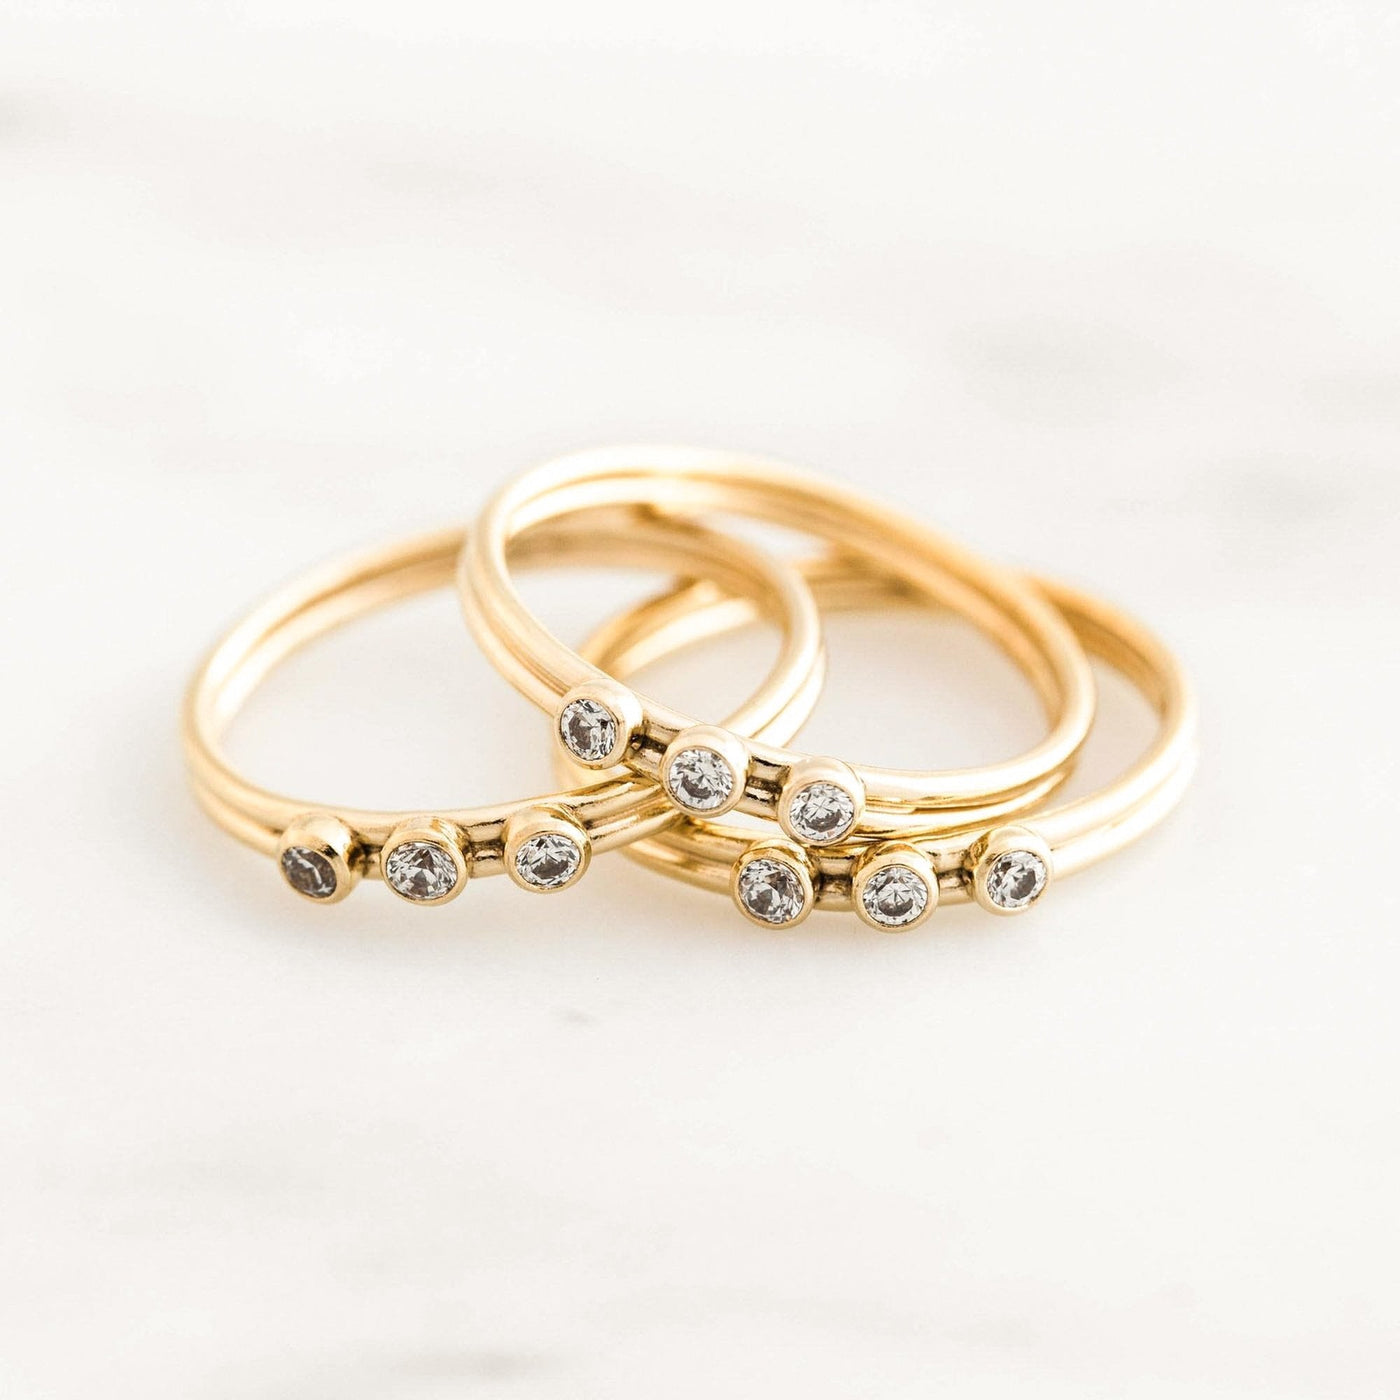 Triple Diamond Ring by Simple & Dainty Jewelry